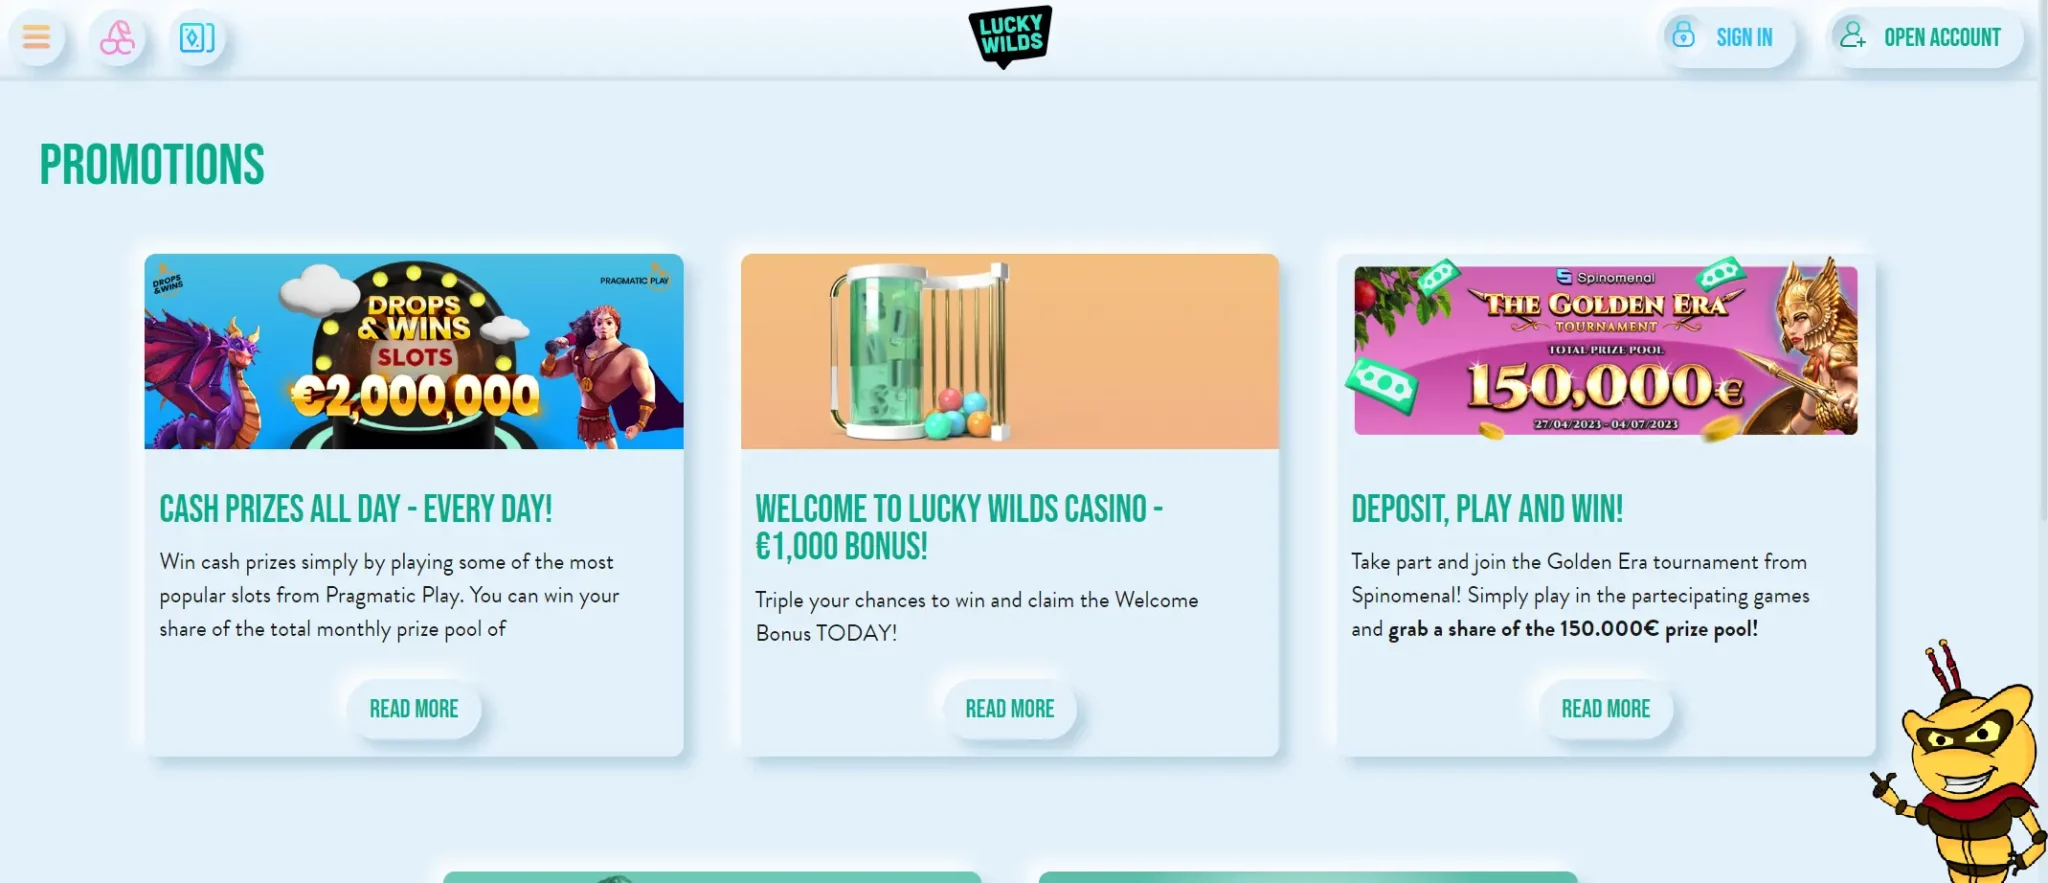 Overview of Lucky Wilds Casino Bonus Offers